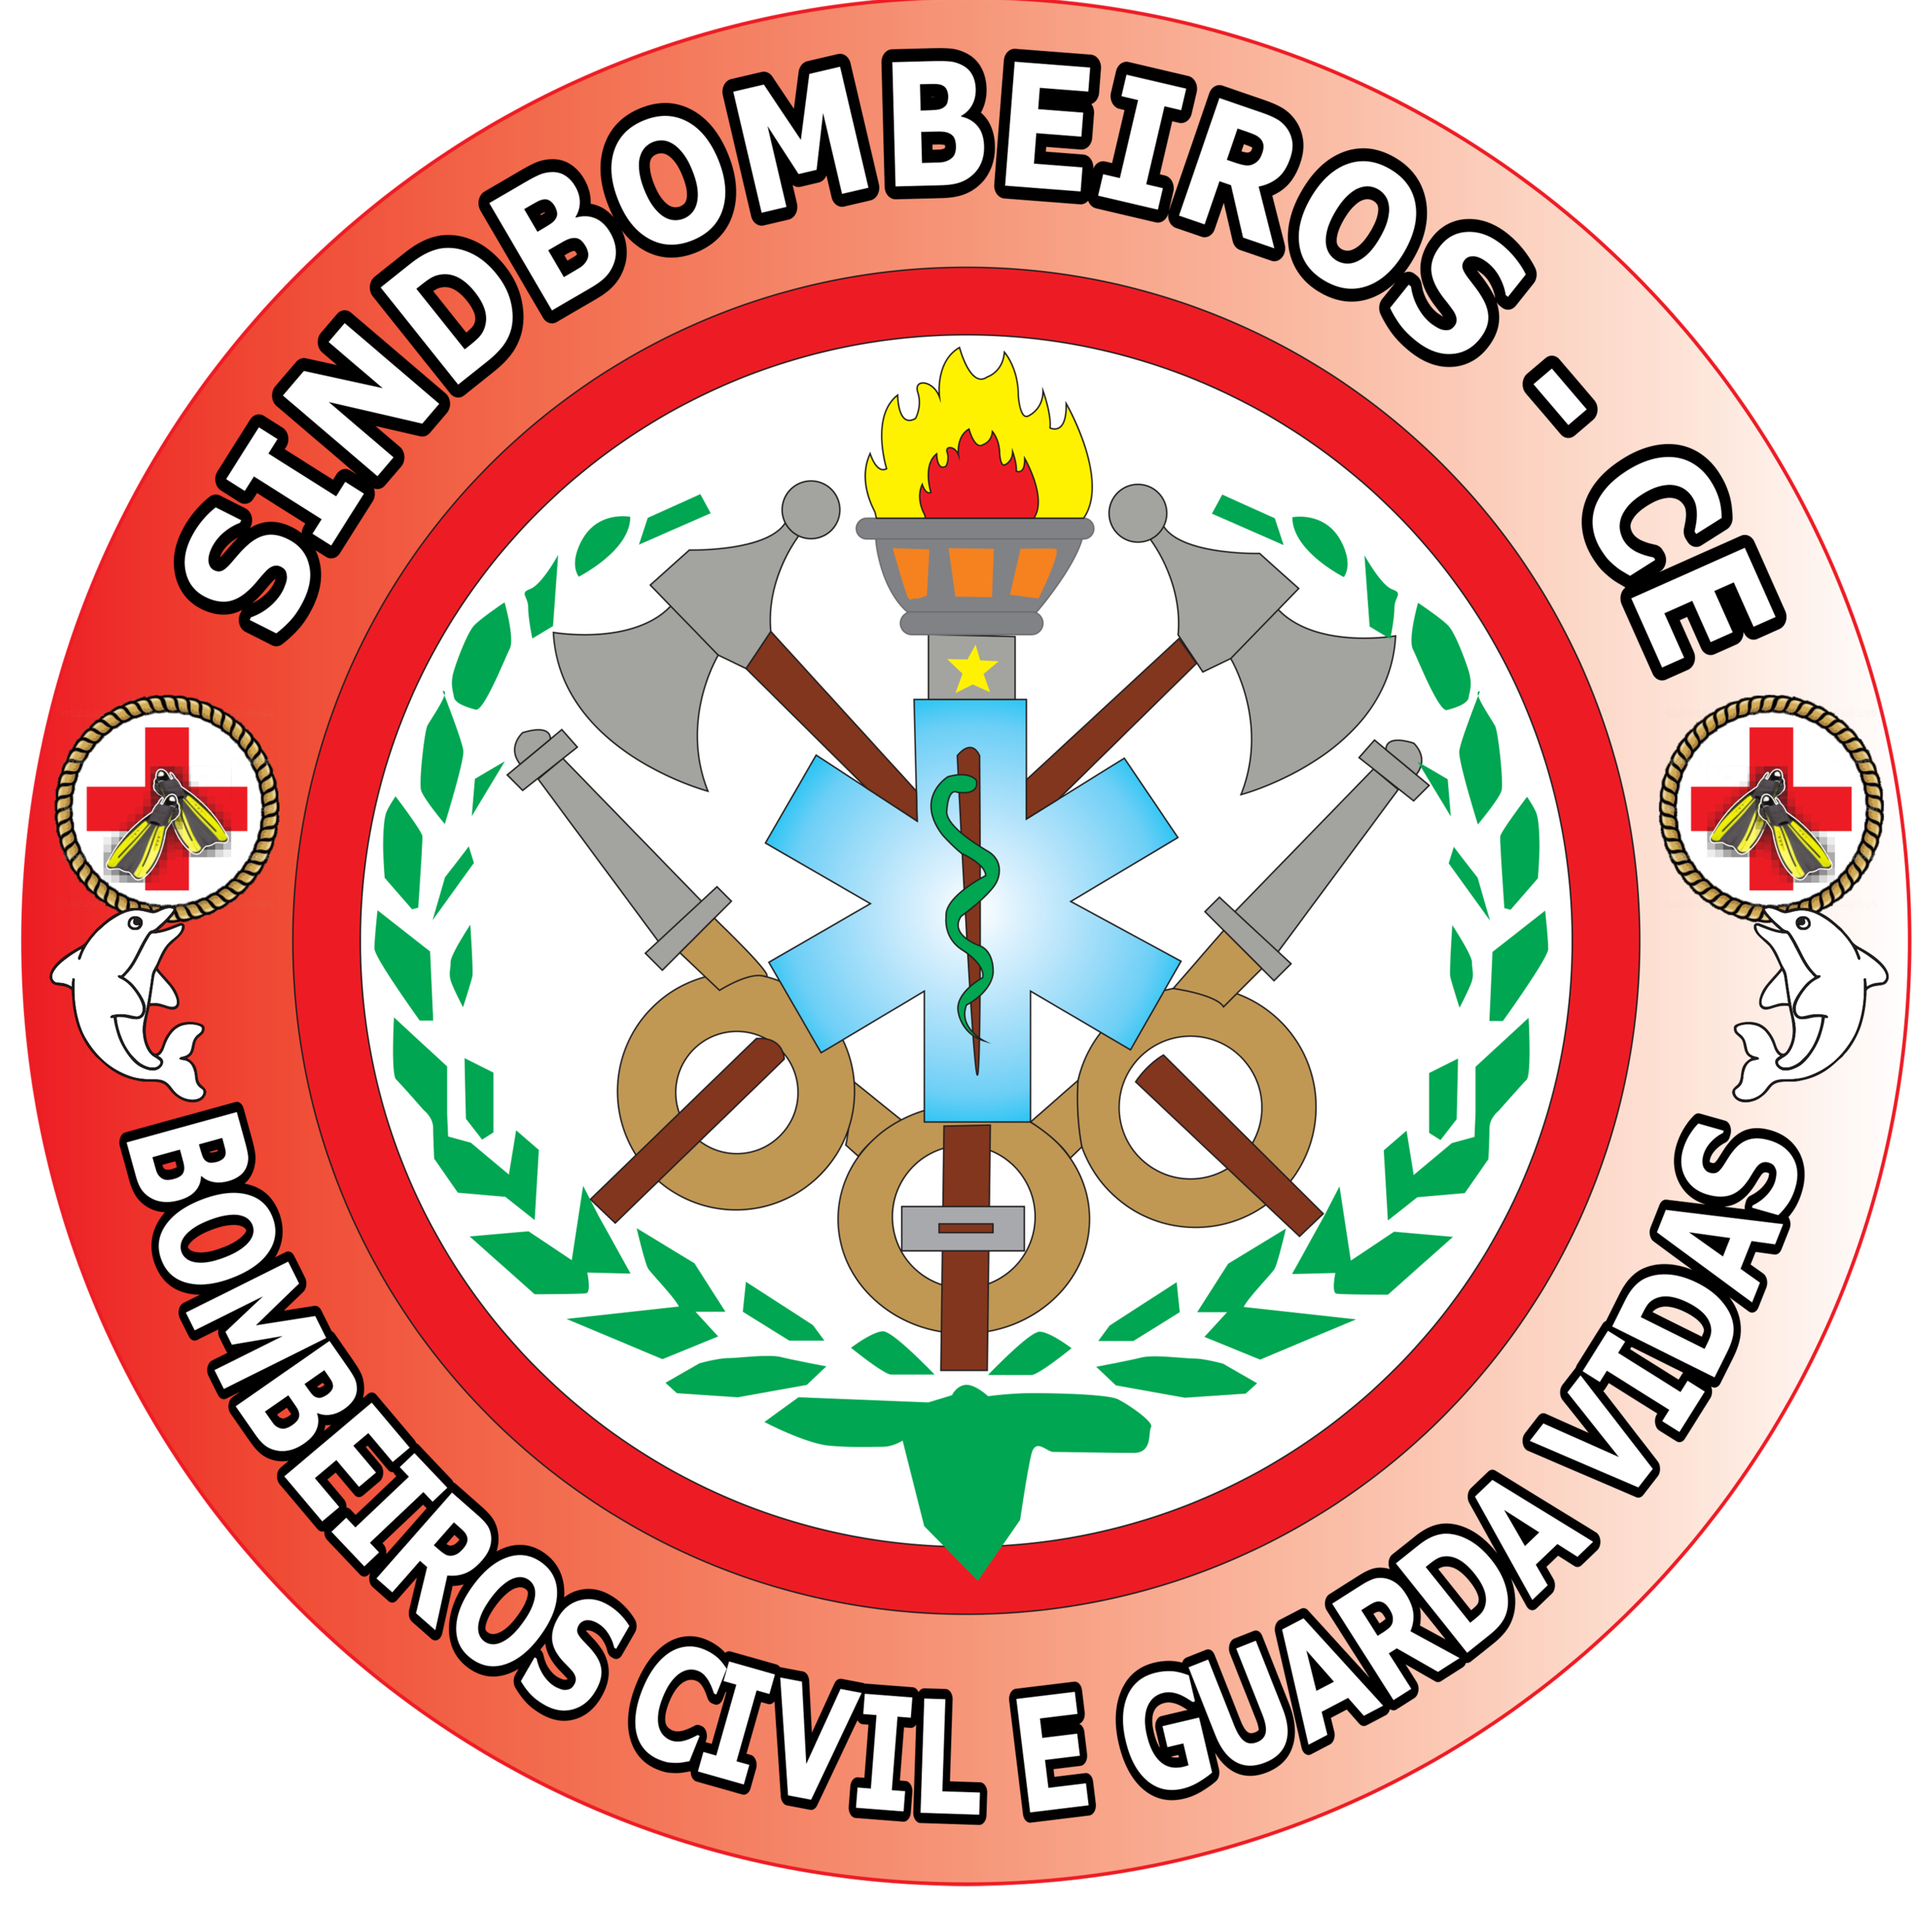 Logo - SINDBOMBEIROS-CE - Fortaleza-CE.png